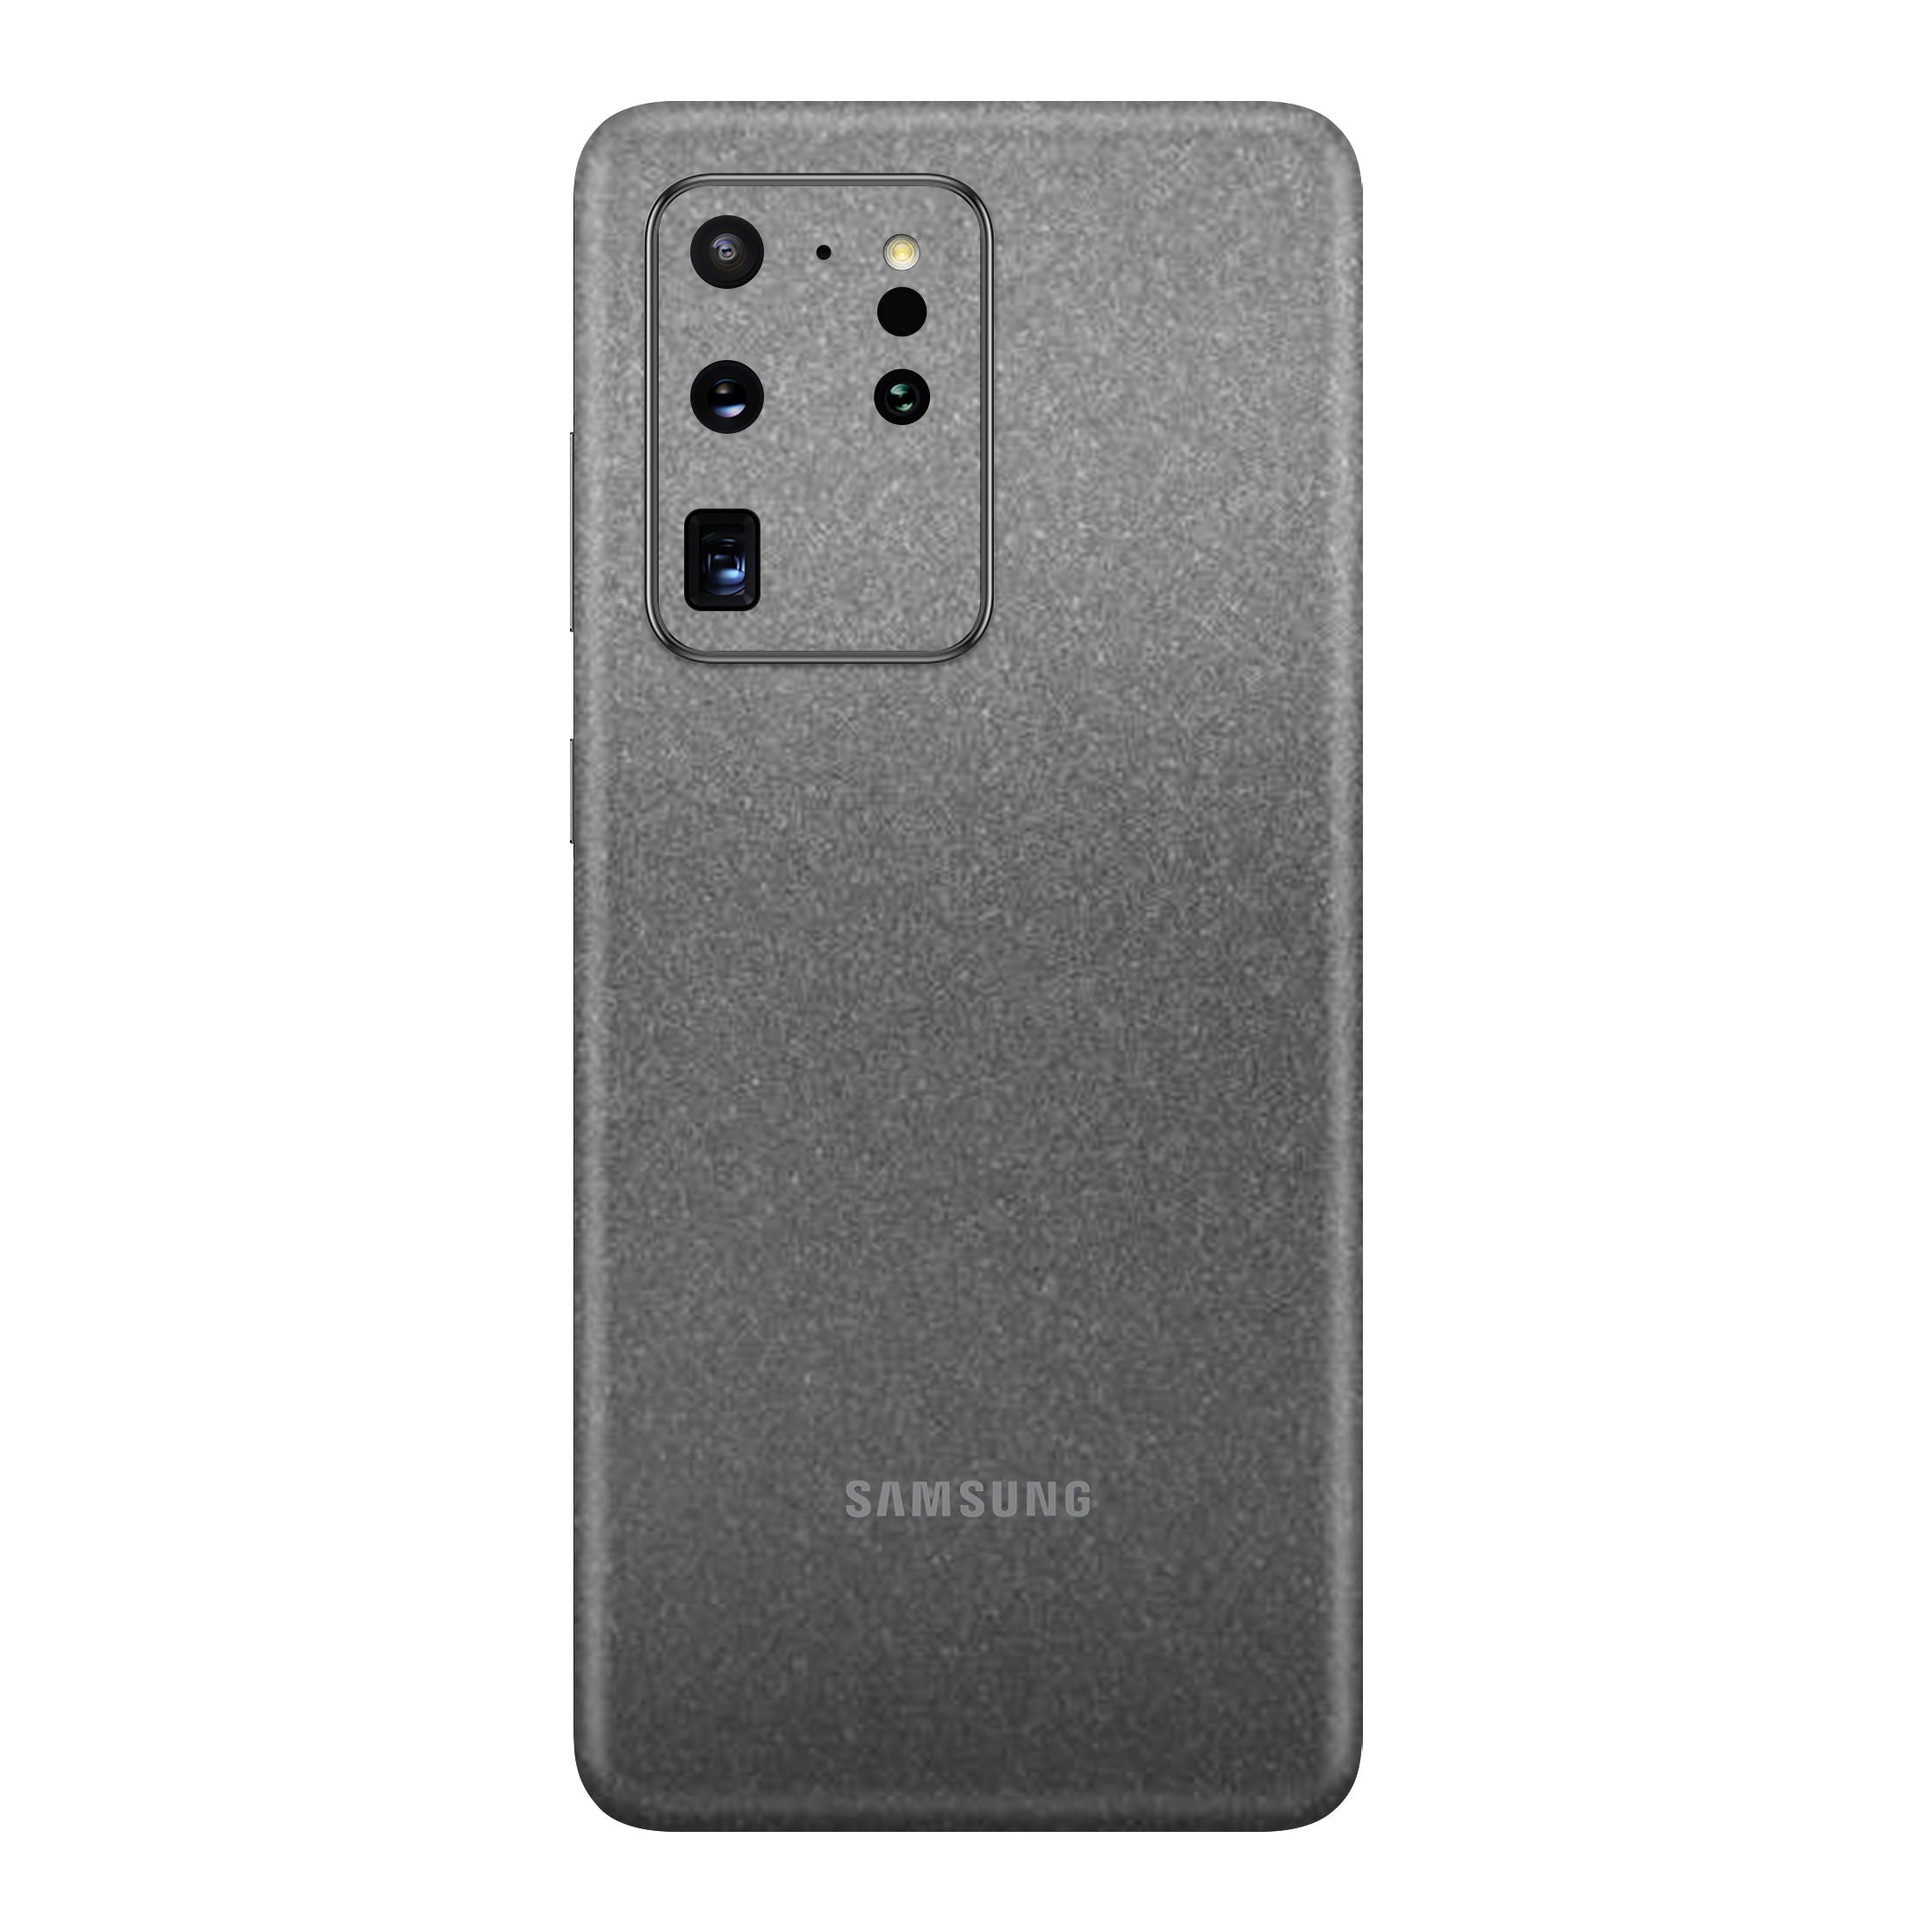 Satin Dark Gray Skin for Samsung S20 Ultra